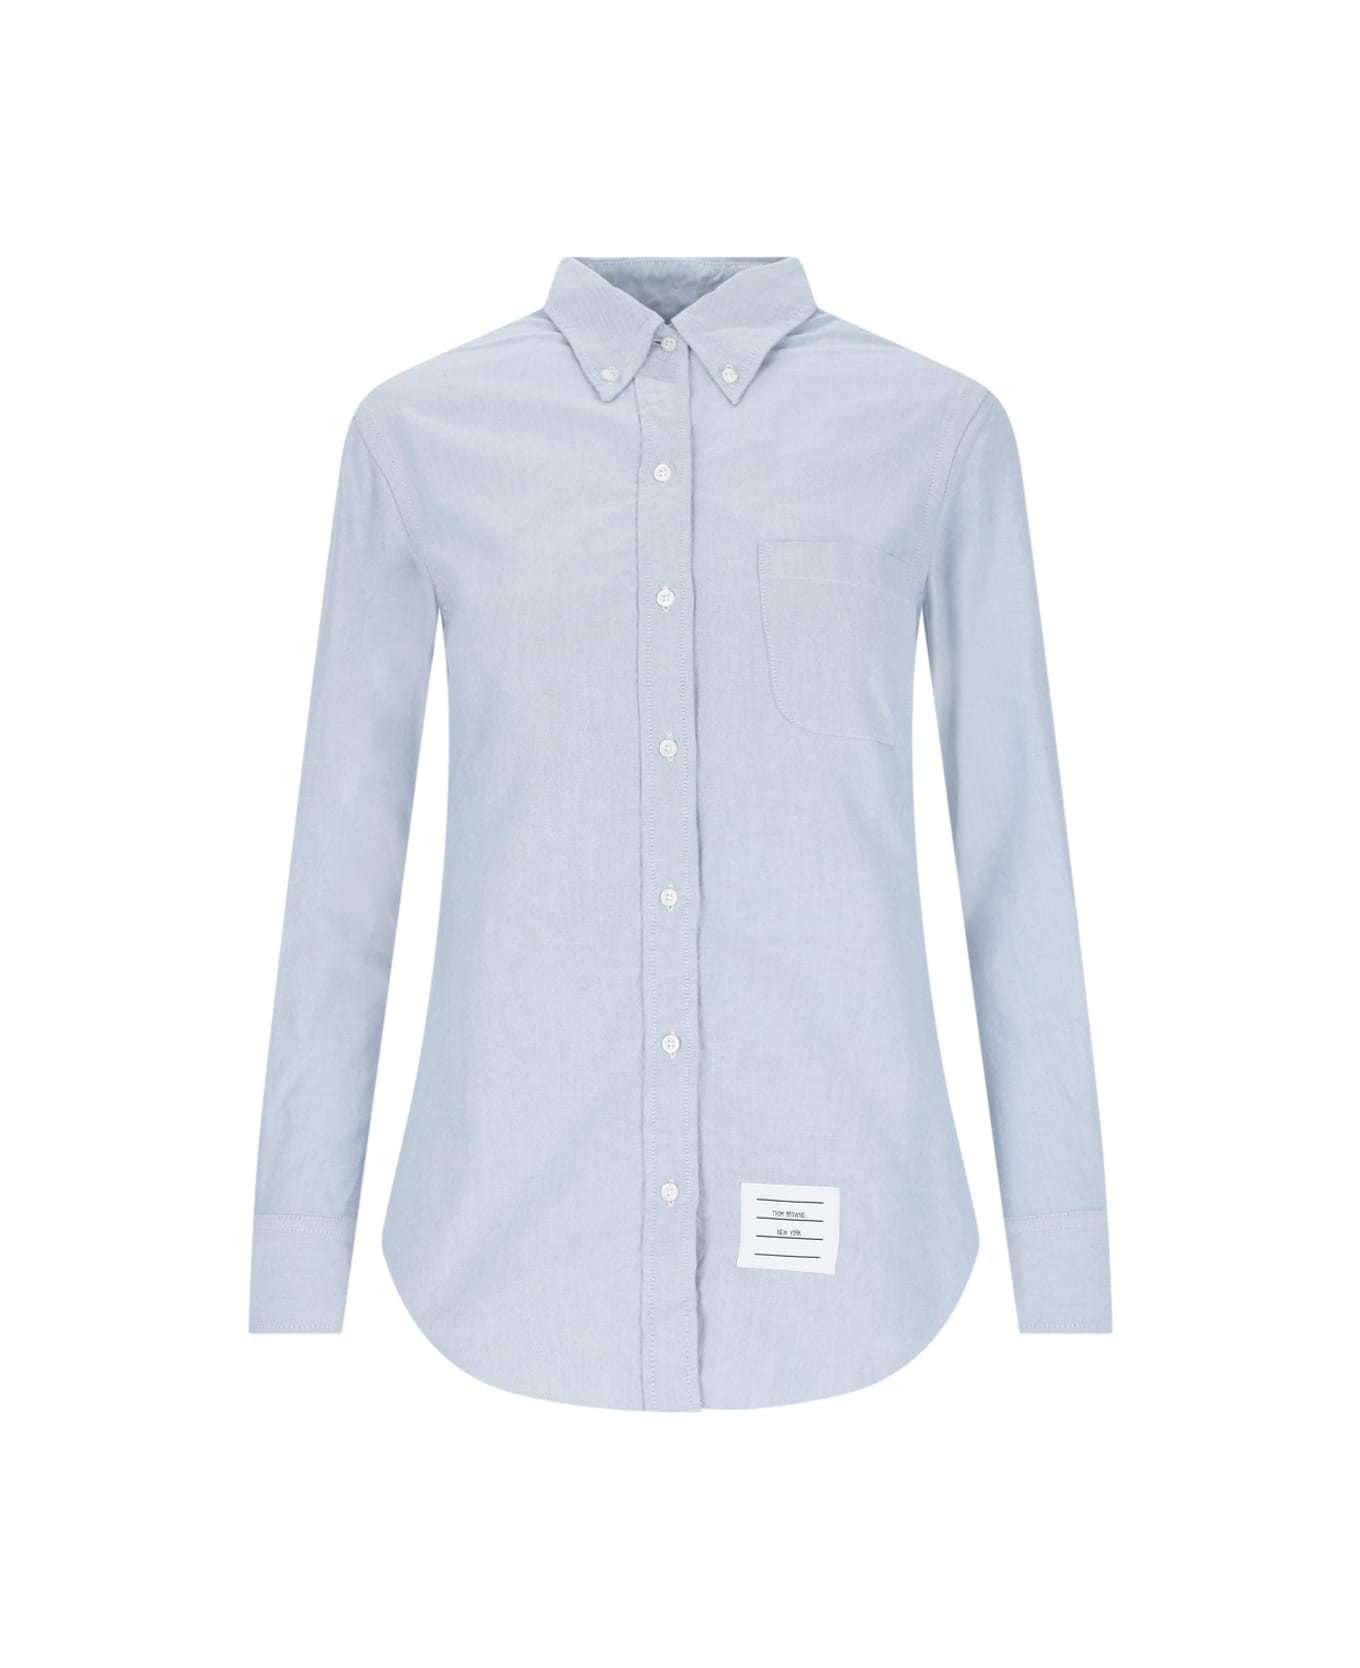 Thom Browne Classic Shirt - Light Blue